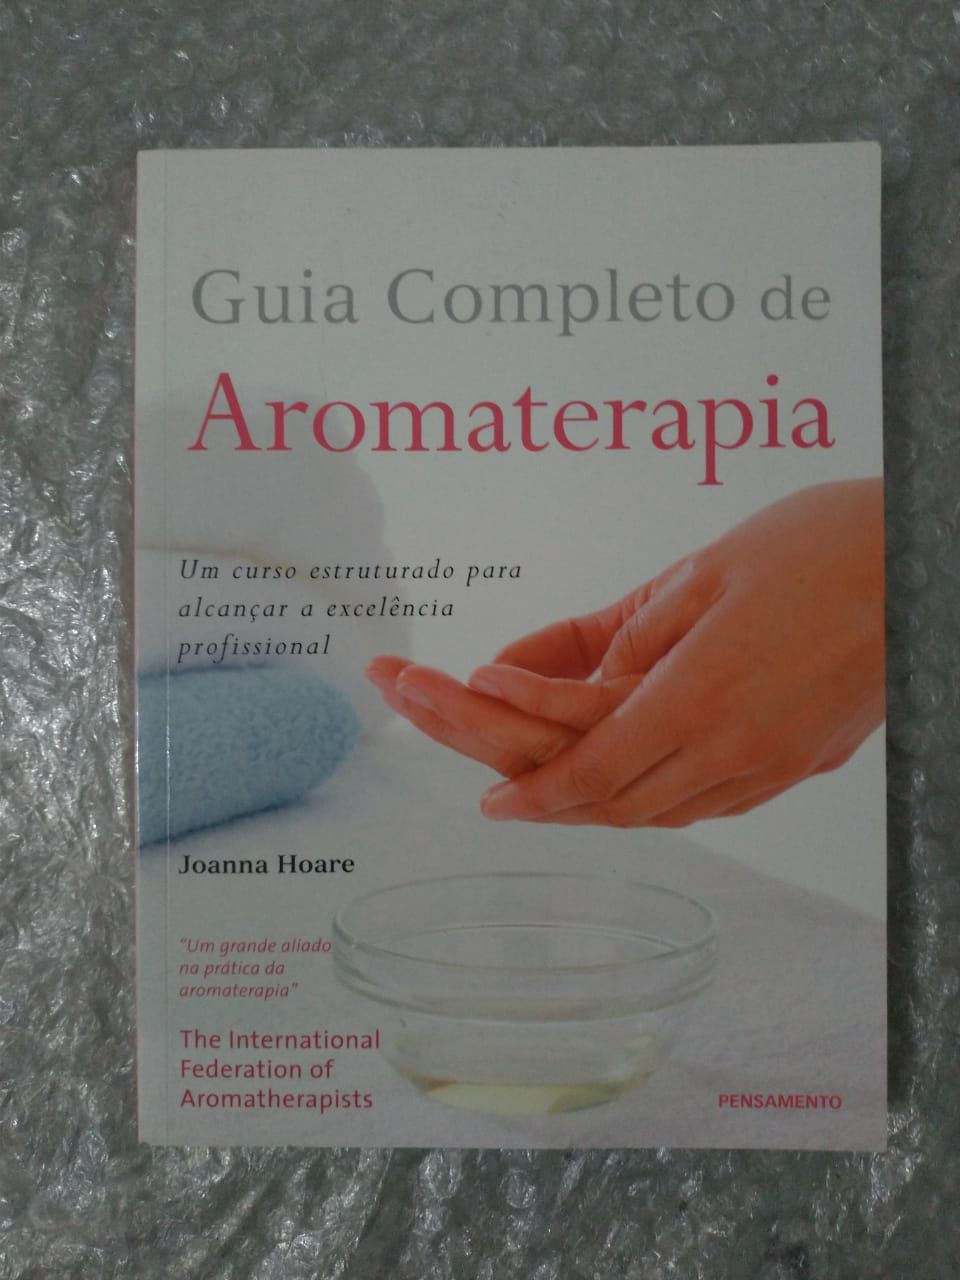 Aromaterapia: Guia Completo Para Iniciantes